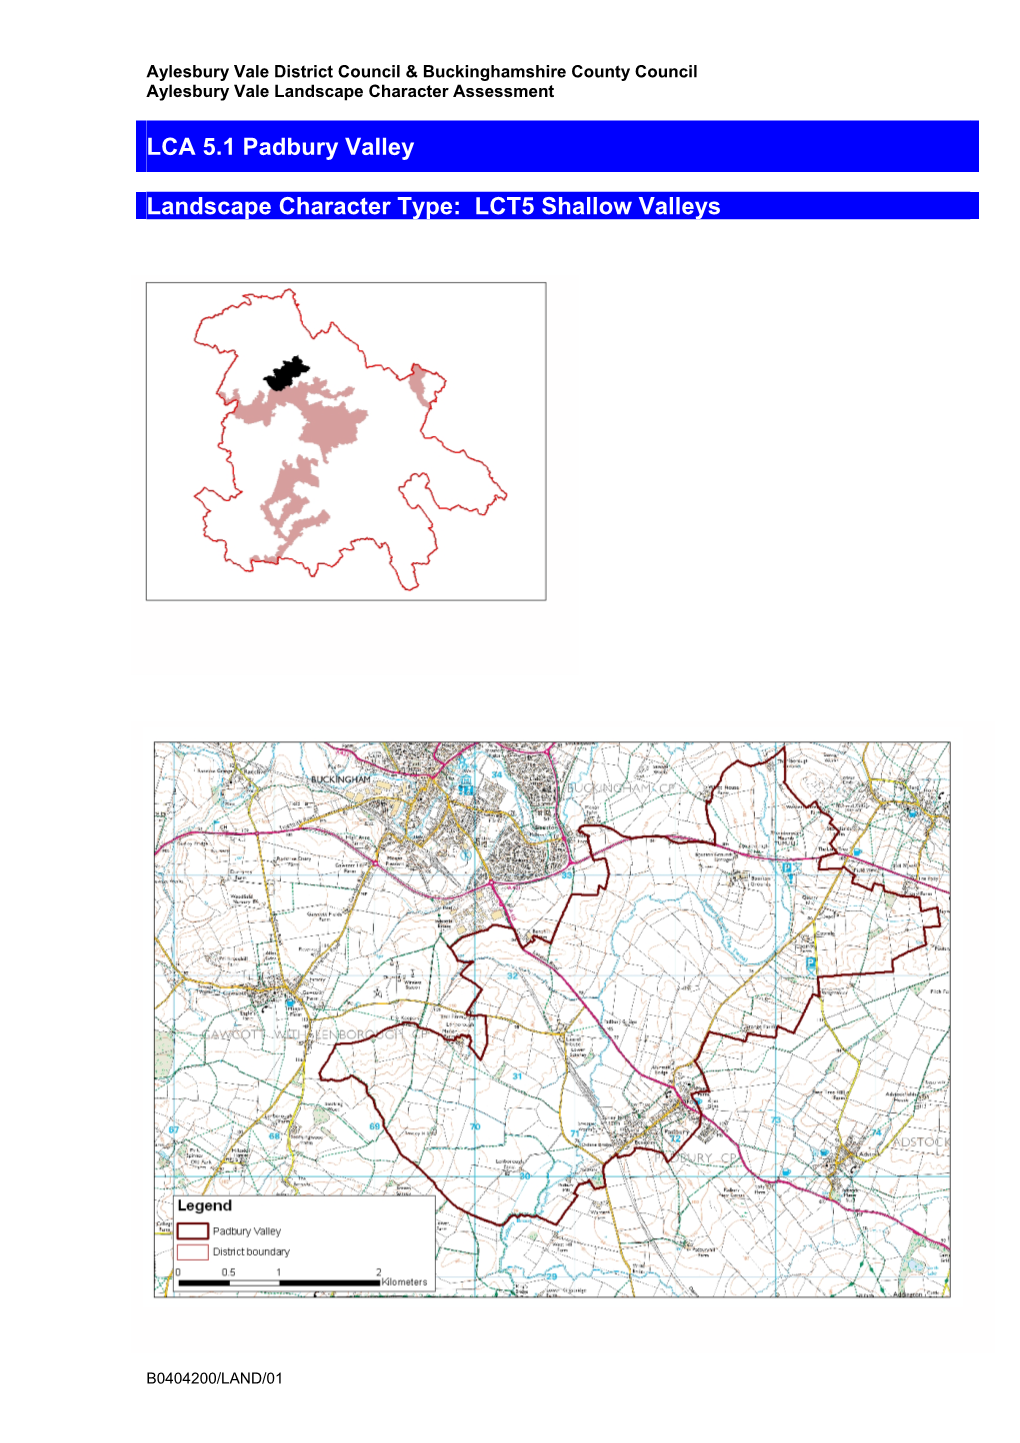 LCA 5.1 Padbury Valley Revised 1 May 08.Pdf